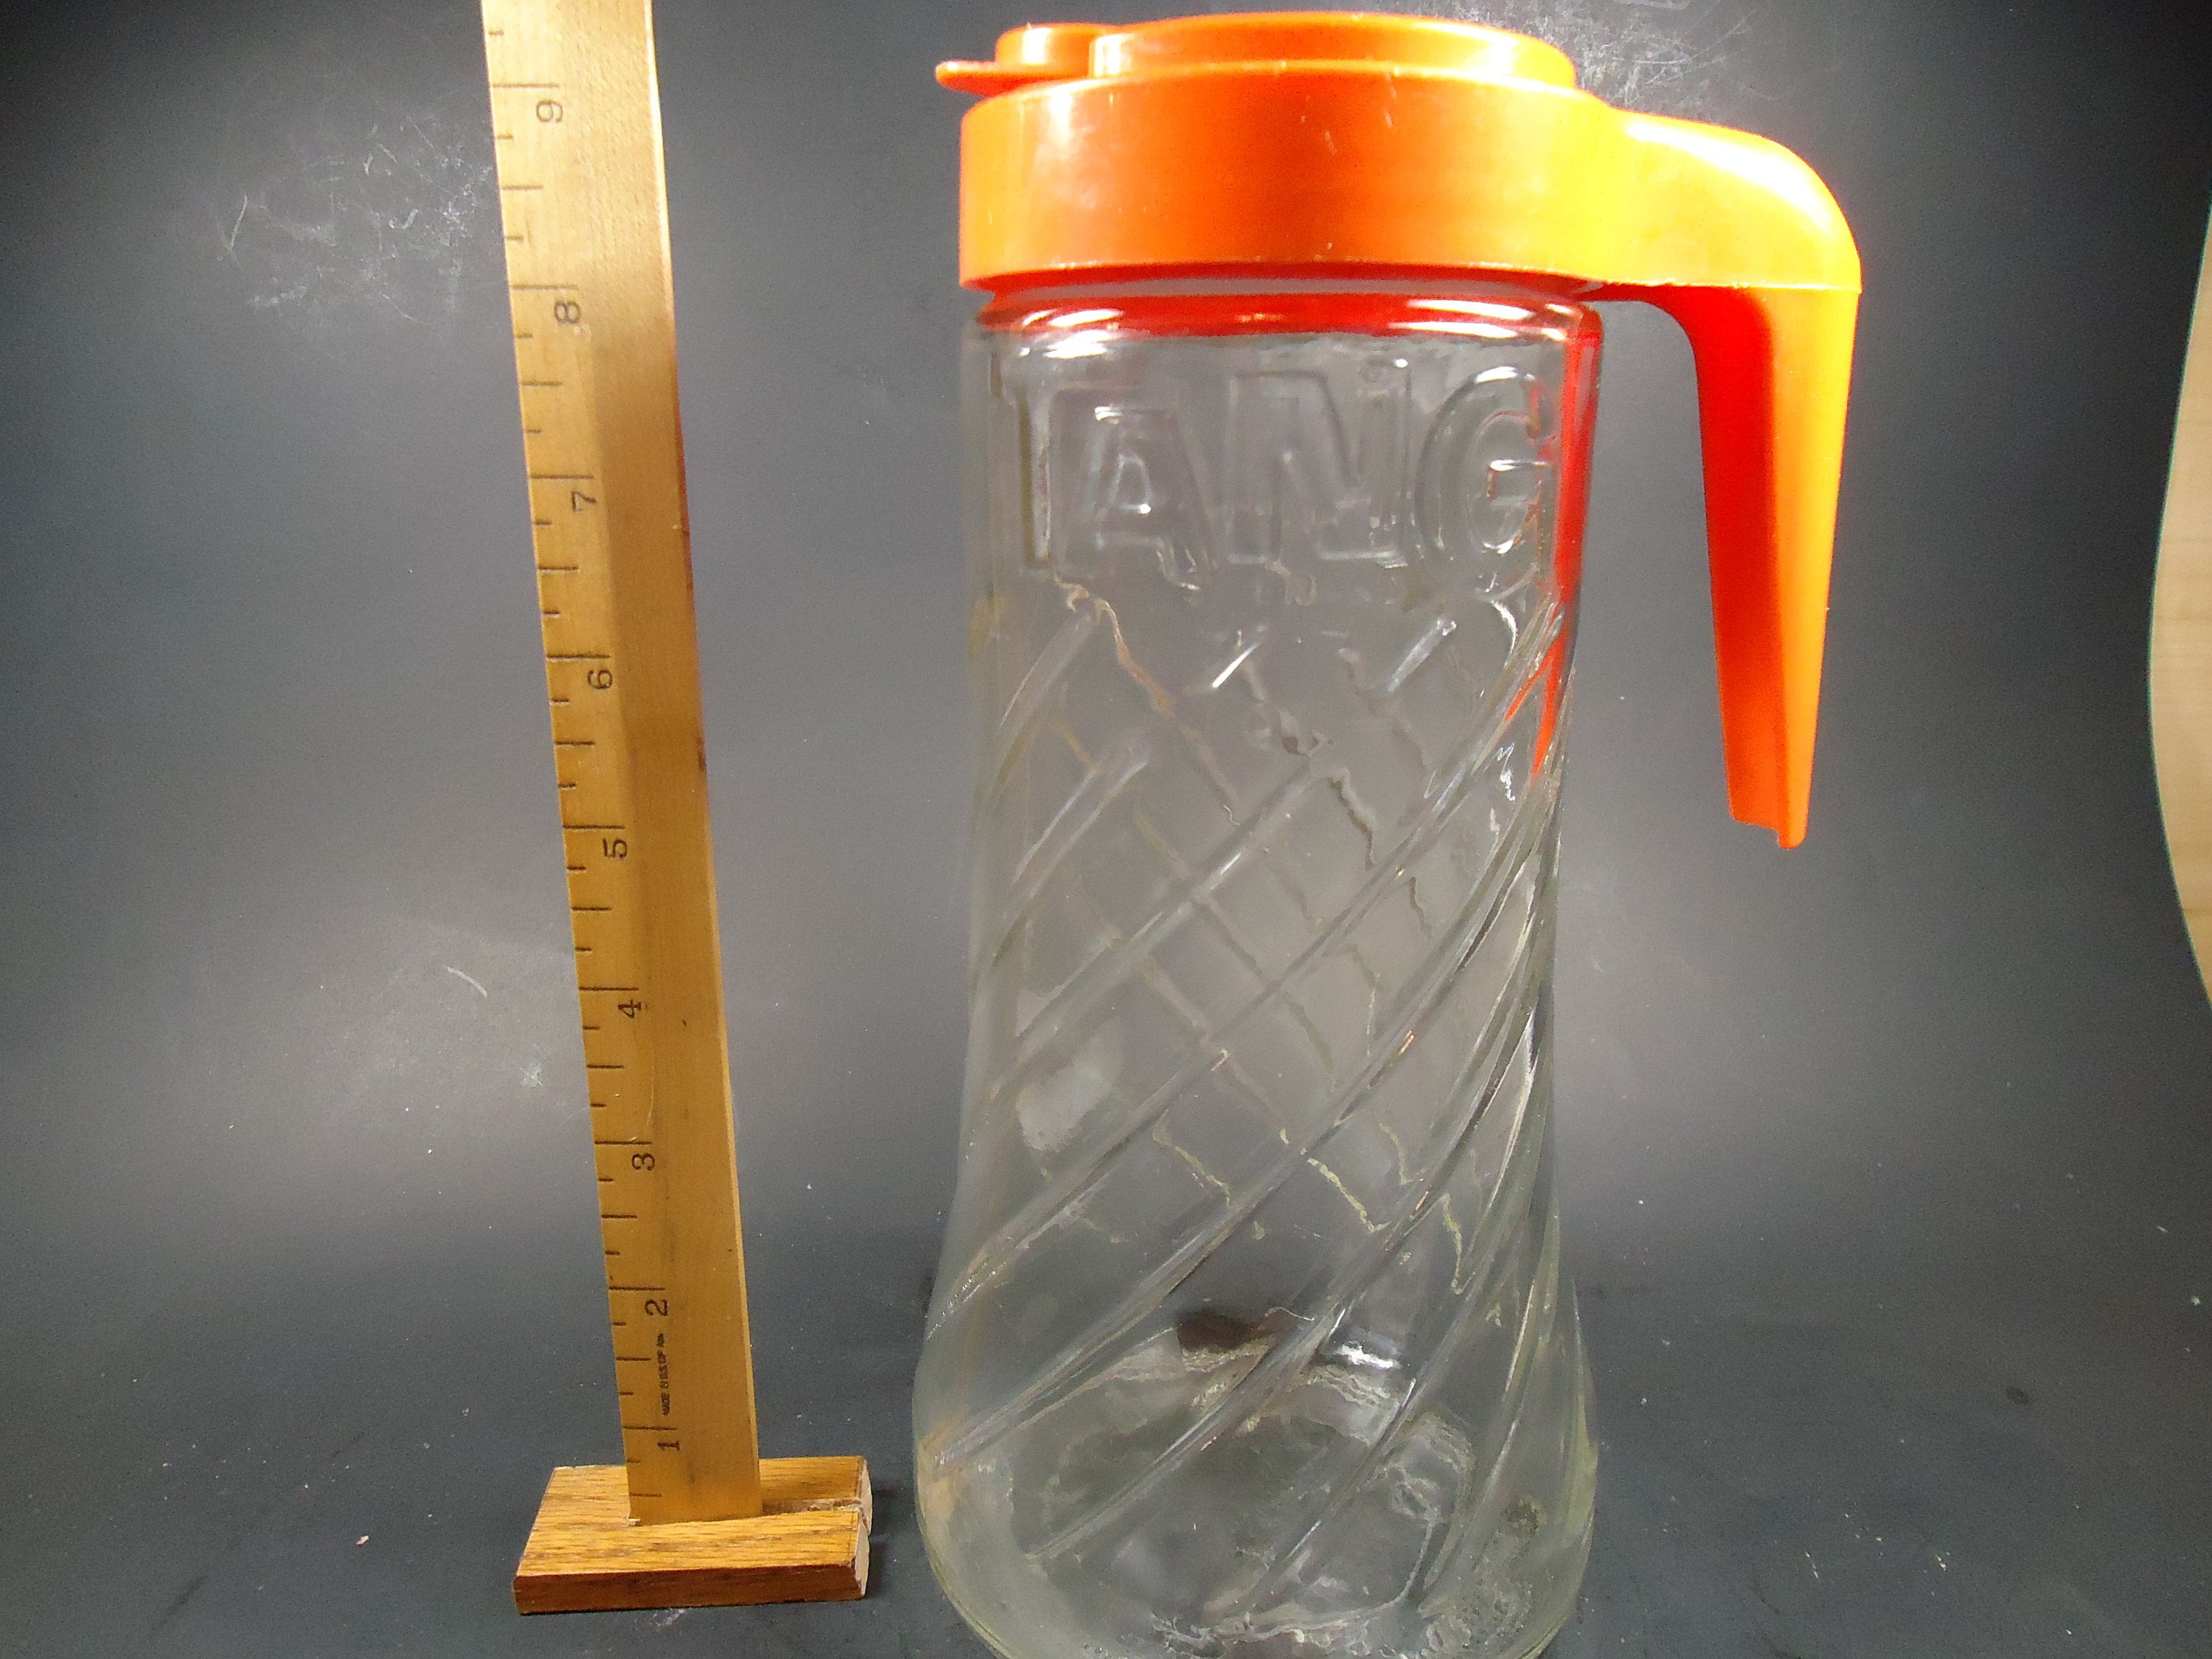 Hinder Altijd Kosten Tang Anchor Hocking Glass Juice Pitcher Orange Plastic Lid - Etsy